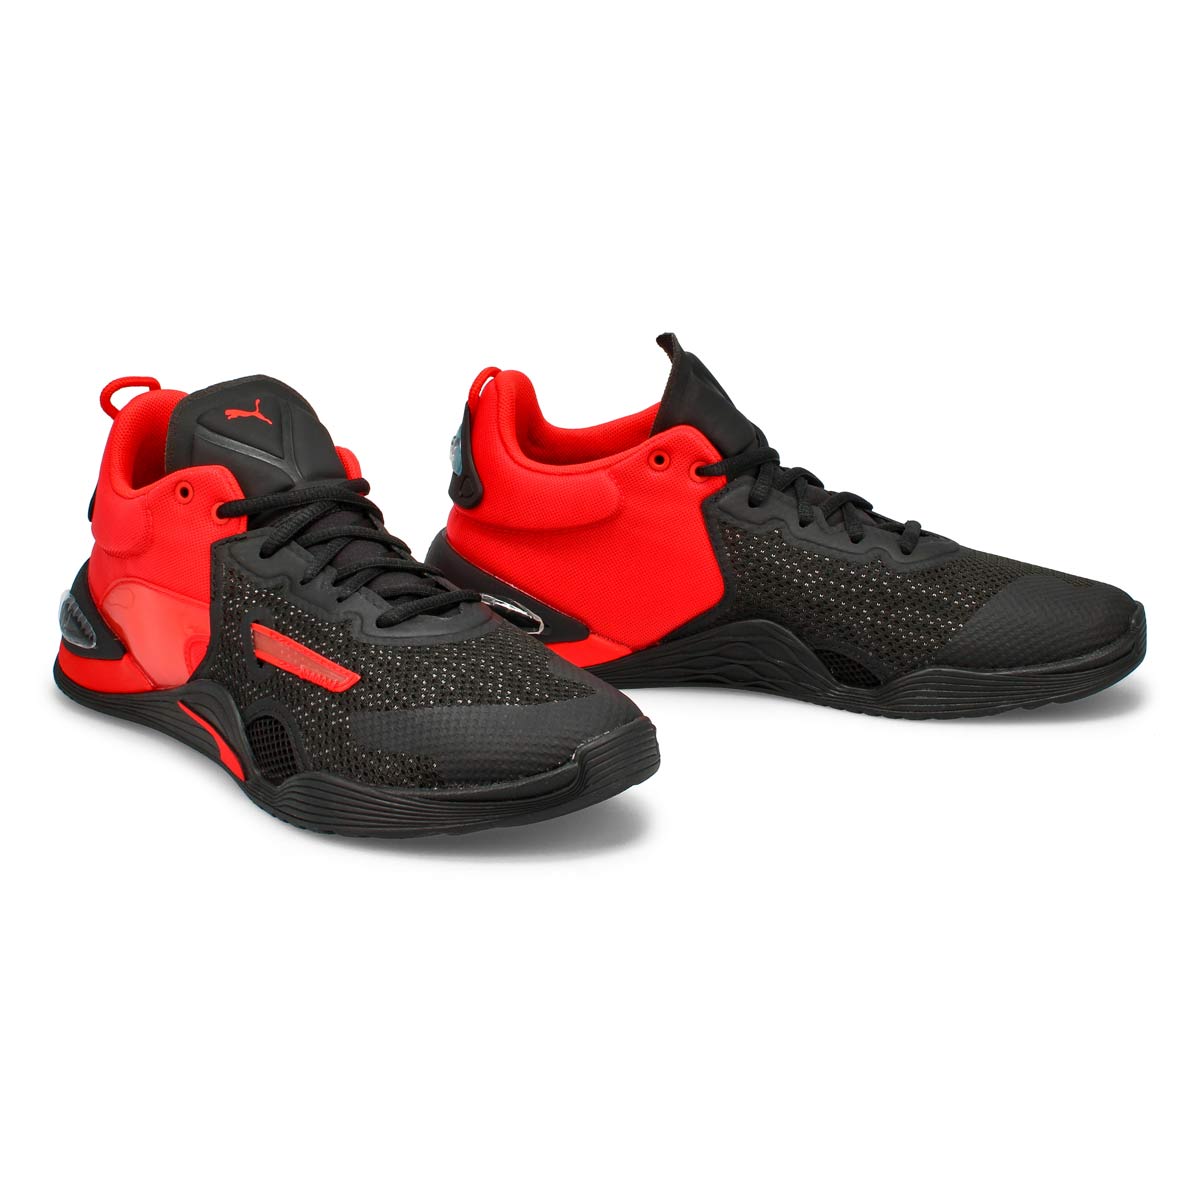 Men's Fuse Sneaker - Poppy red/black